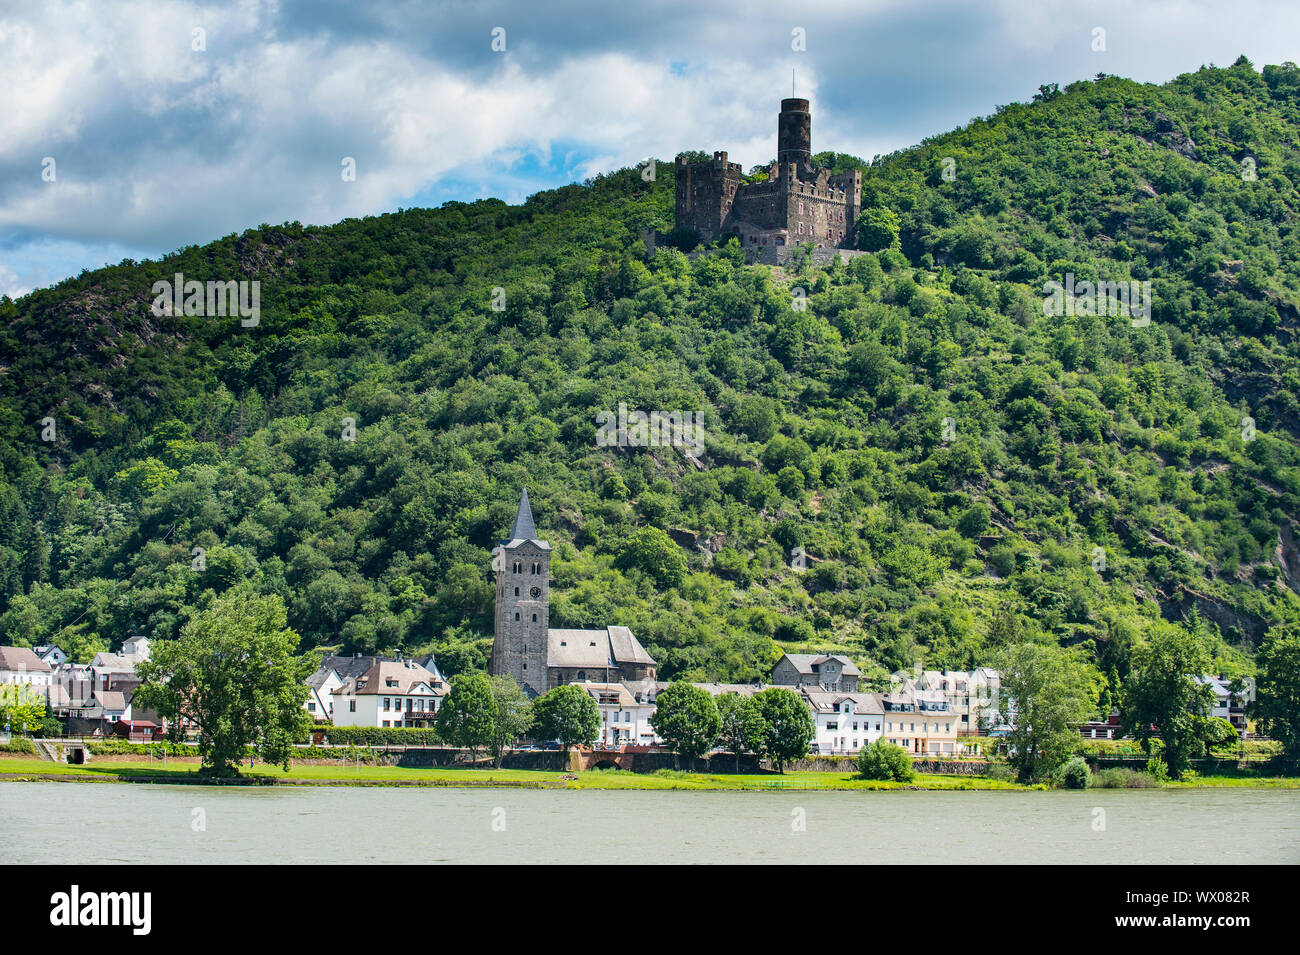 Castle Maus overlooking the Rhine river, UNESCO World Heritage Site, Middle Rhine valley, Rhineland-Palatinate, Germany, Europe Stock Photo